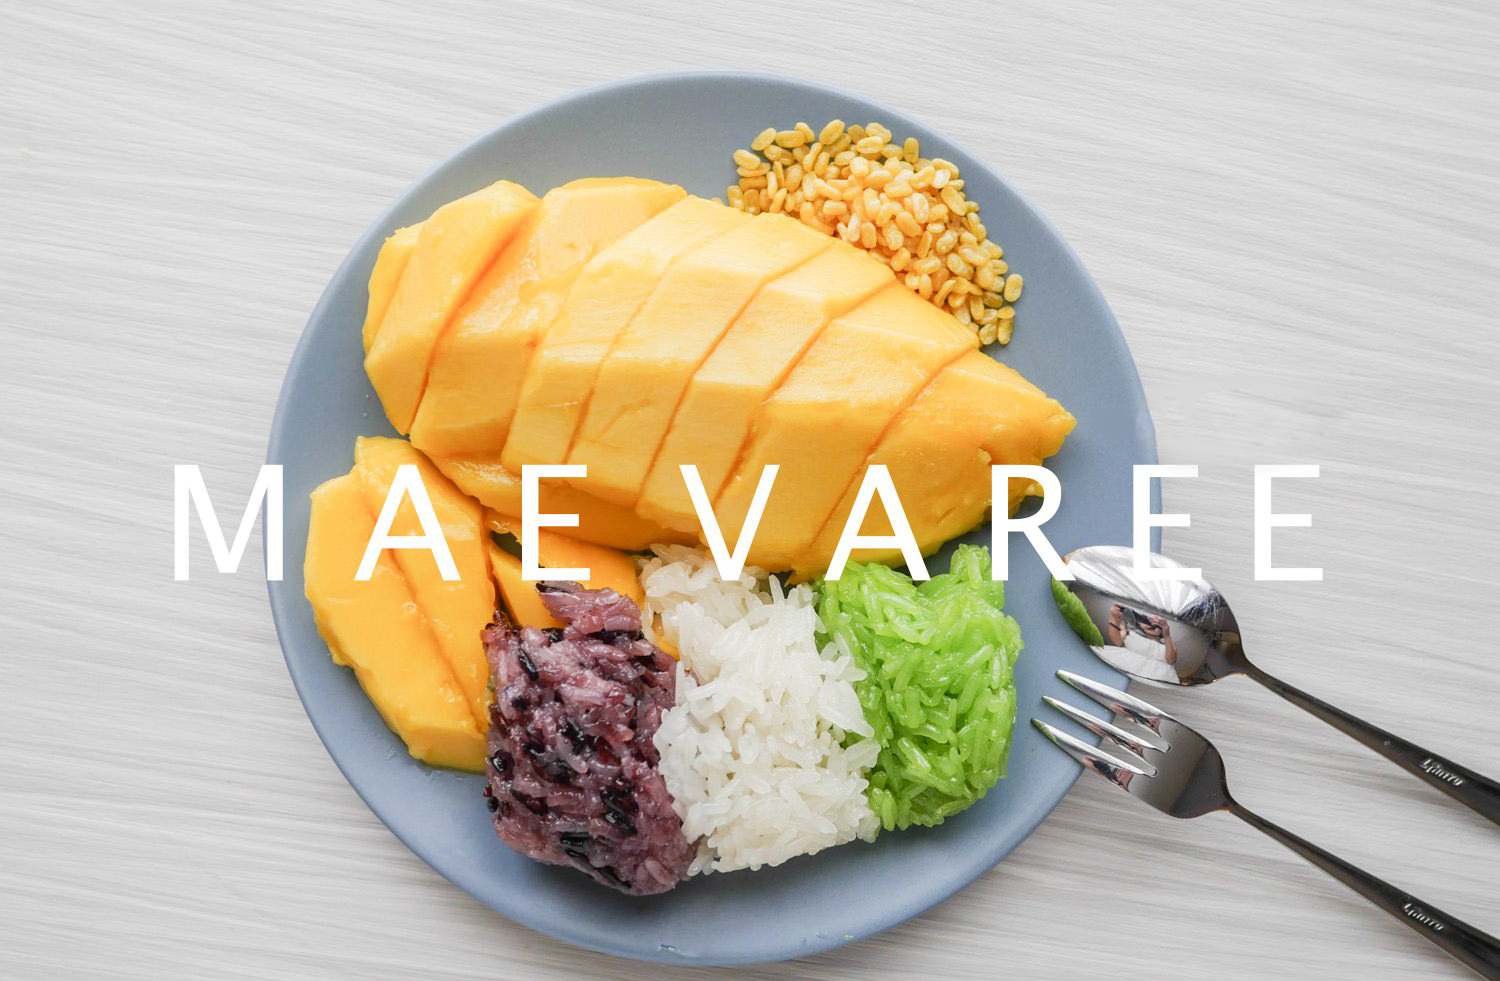 Mae Varee 芒果糯米饭